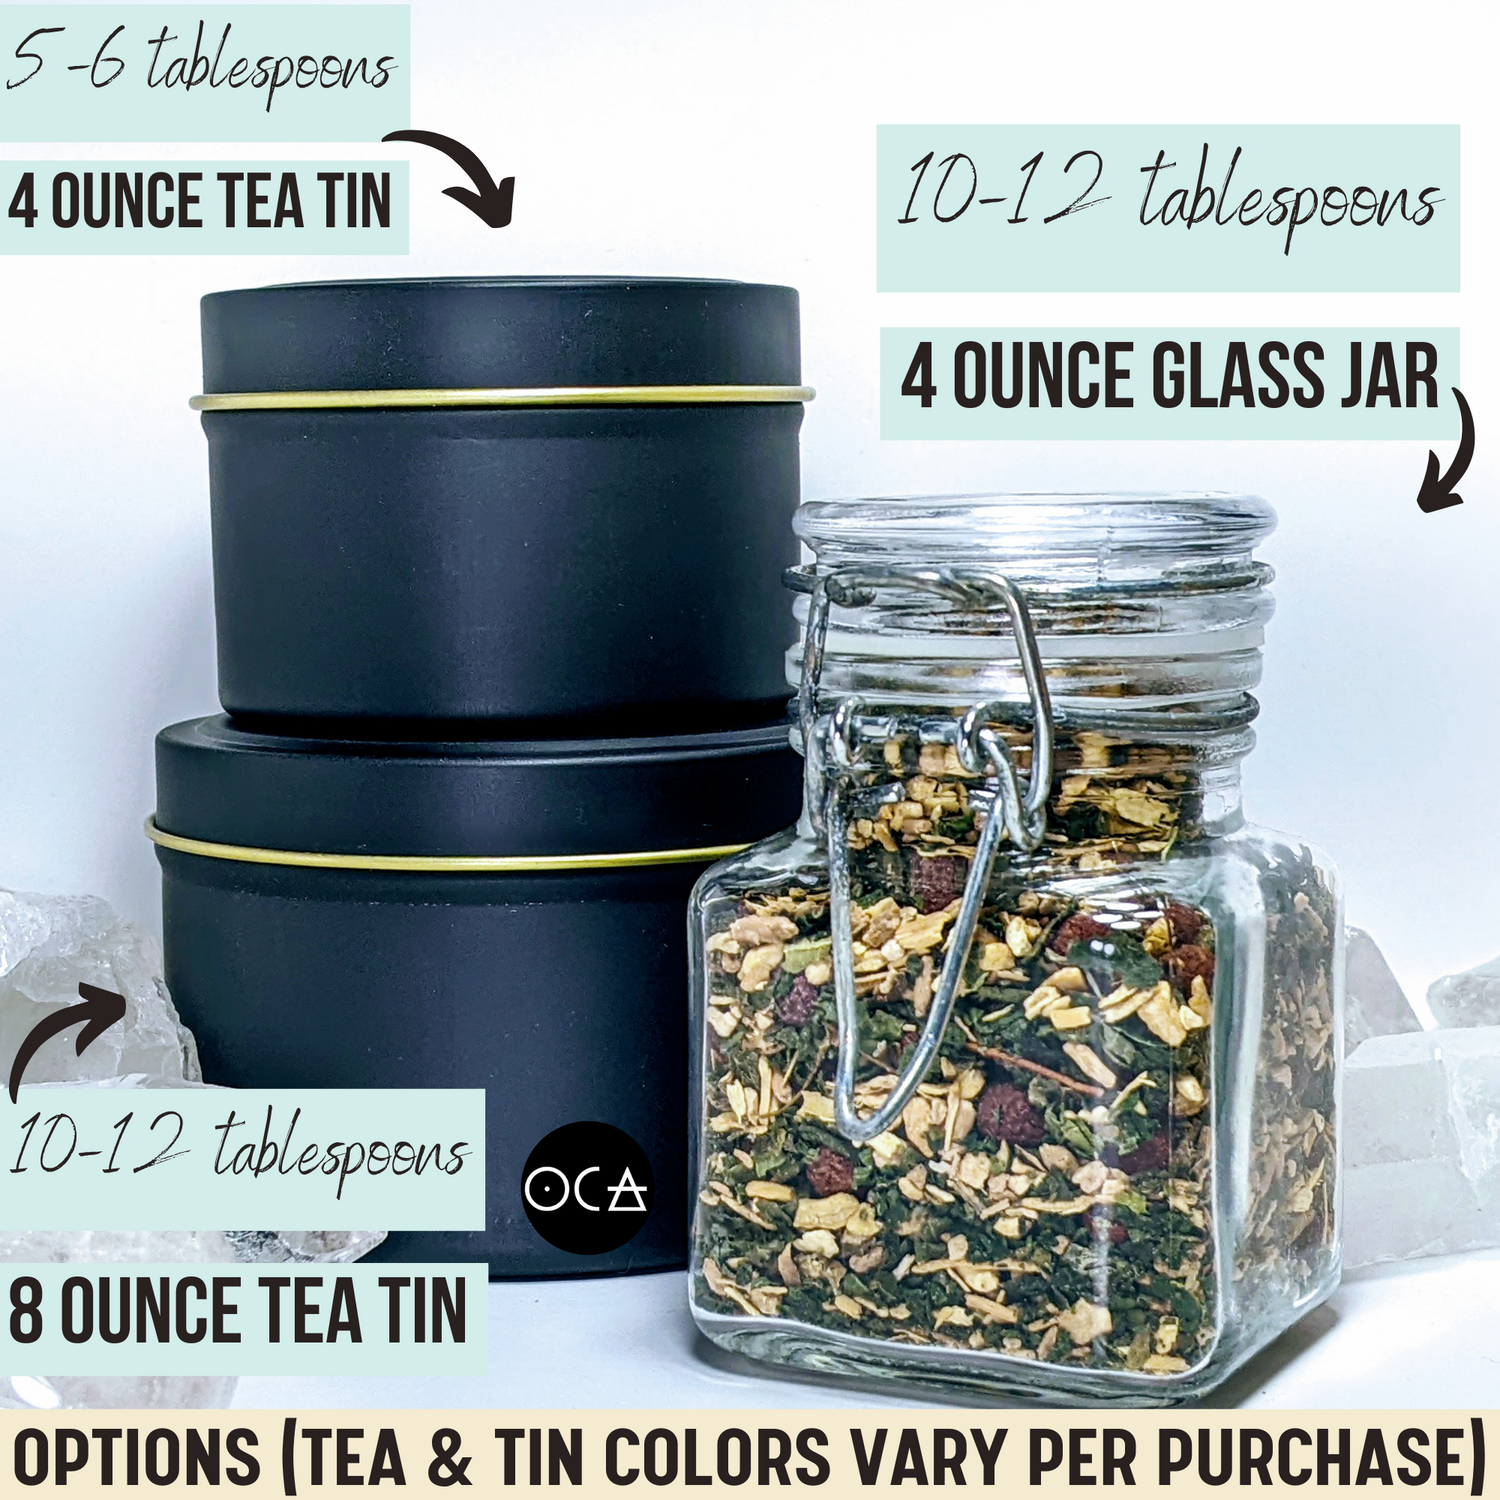 Dickinson Dew (Emily Dickinson Herbal Tea Gift) - Original City Apothecary